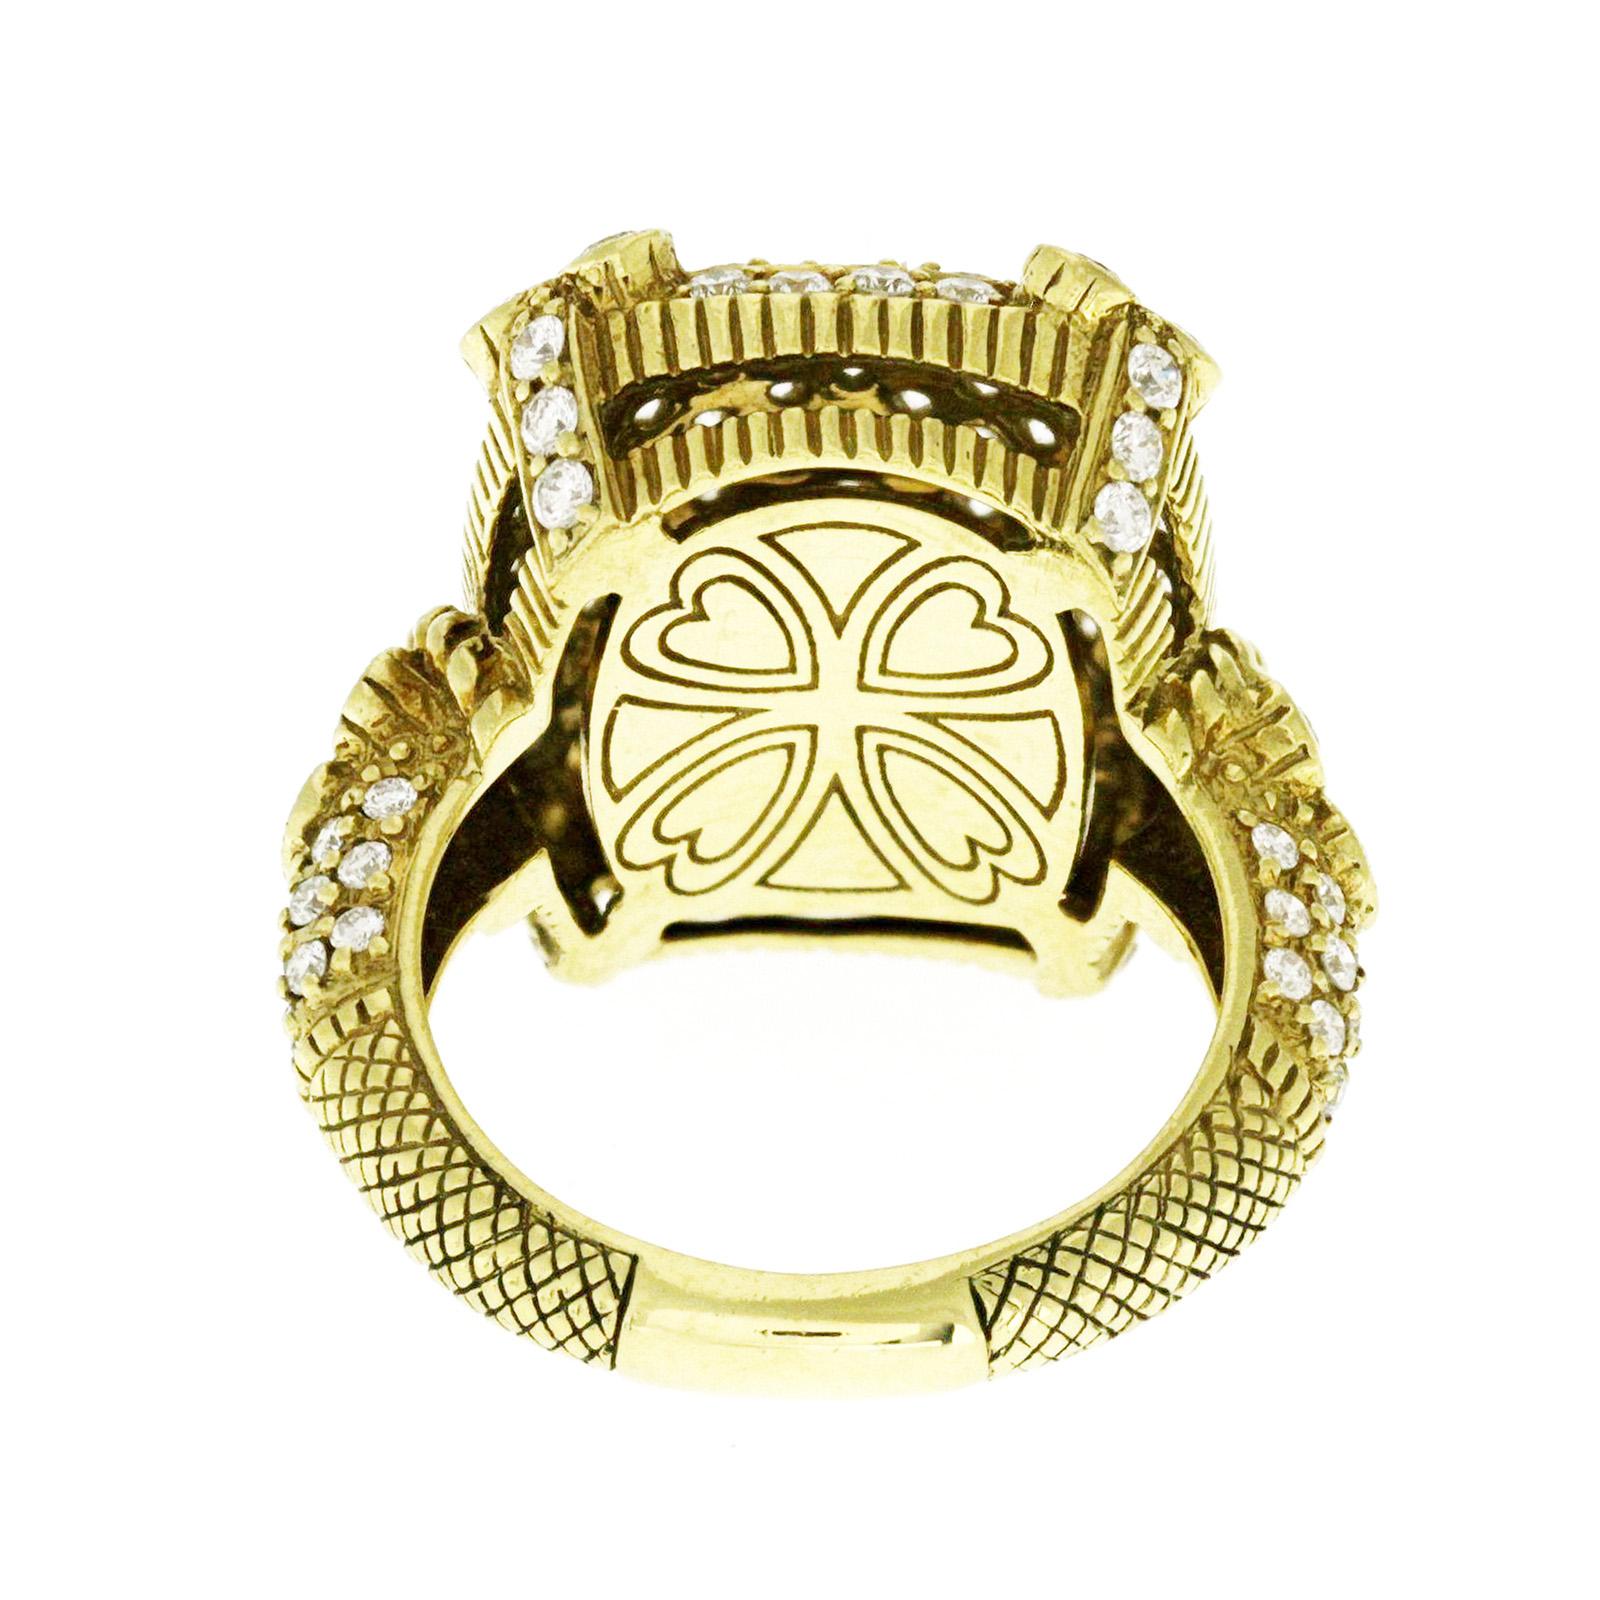 Authentic Judith Ripka 18 Karat Yellow Pave 2.70 Carat Diamond Ring 2